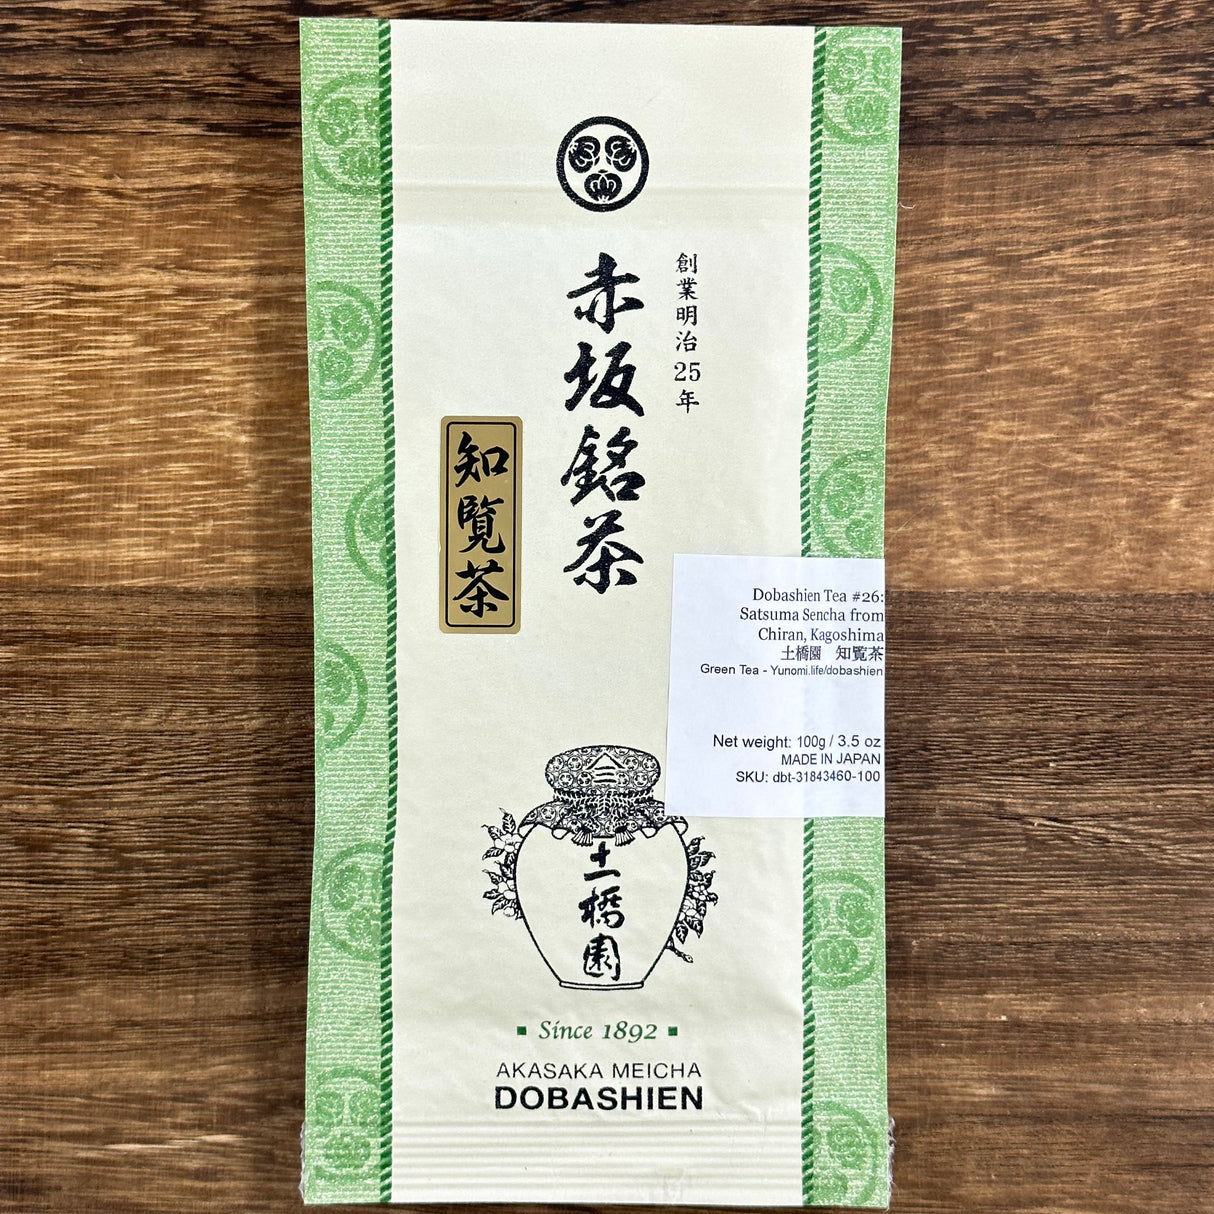 Dobashien Tea #26: Satsuma Sencha from Chiran, Kagoshima 薩摩 知覧茶